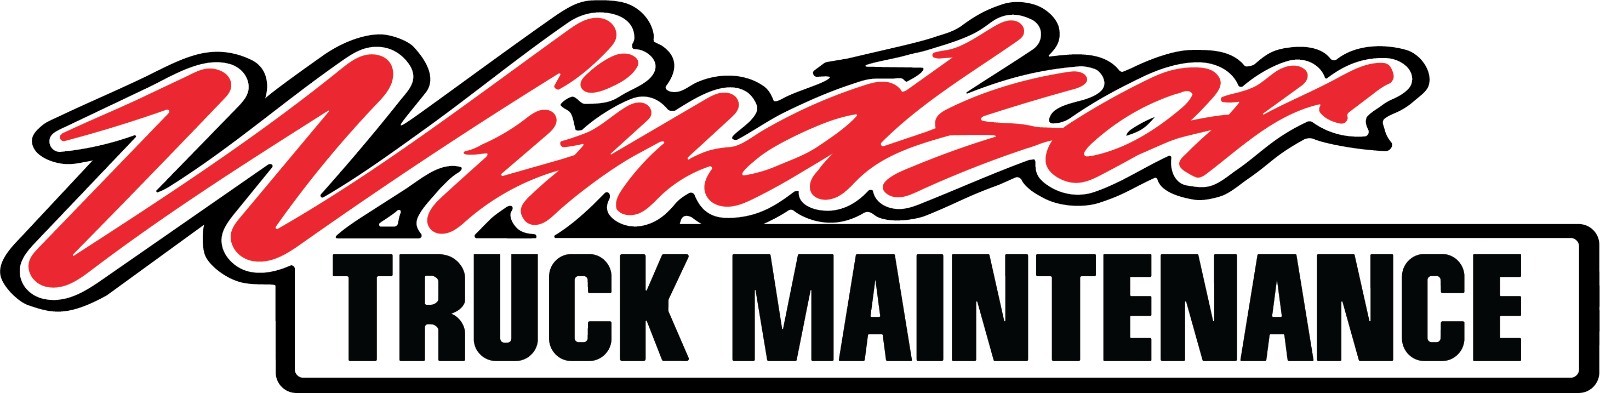 Windsor Truck Maintenance logo